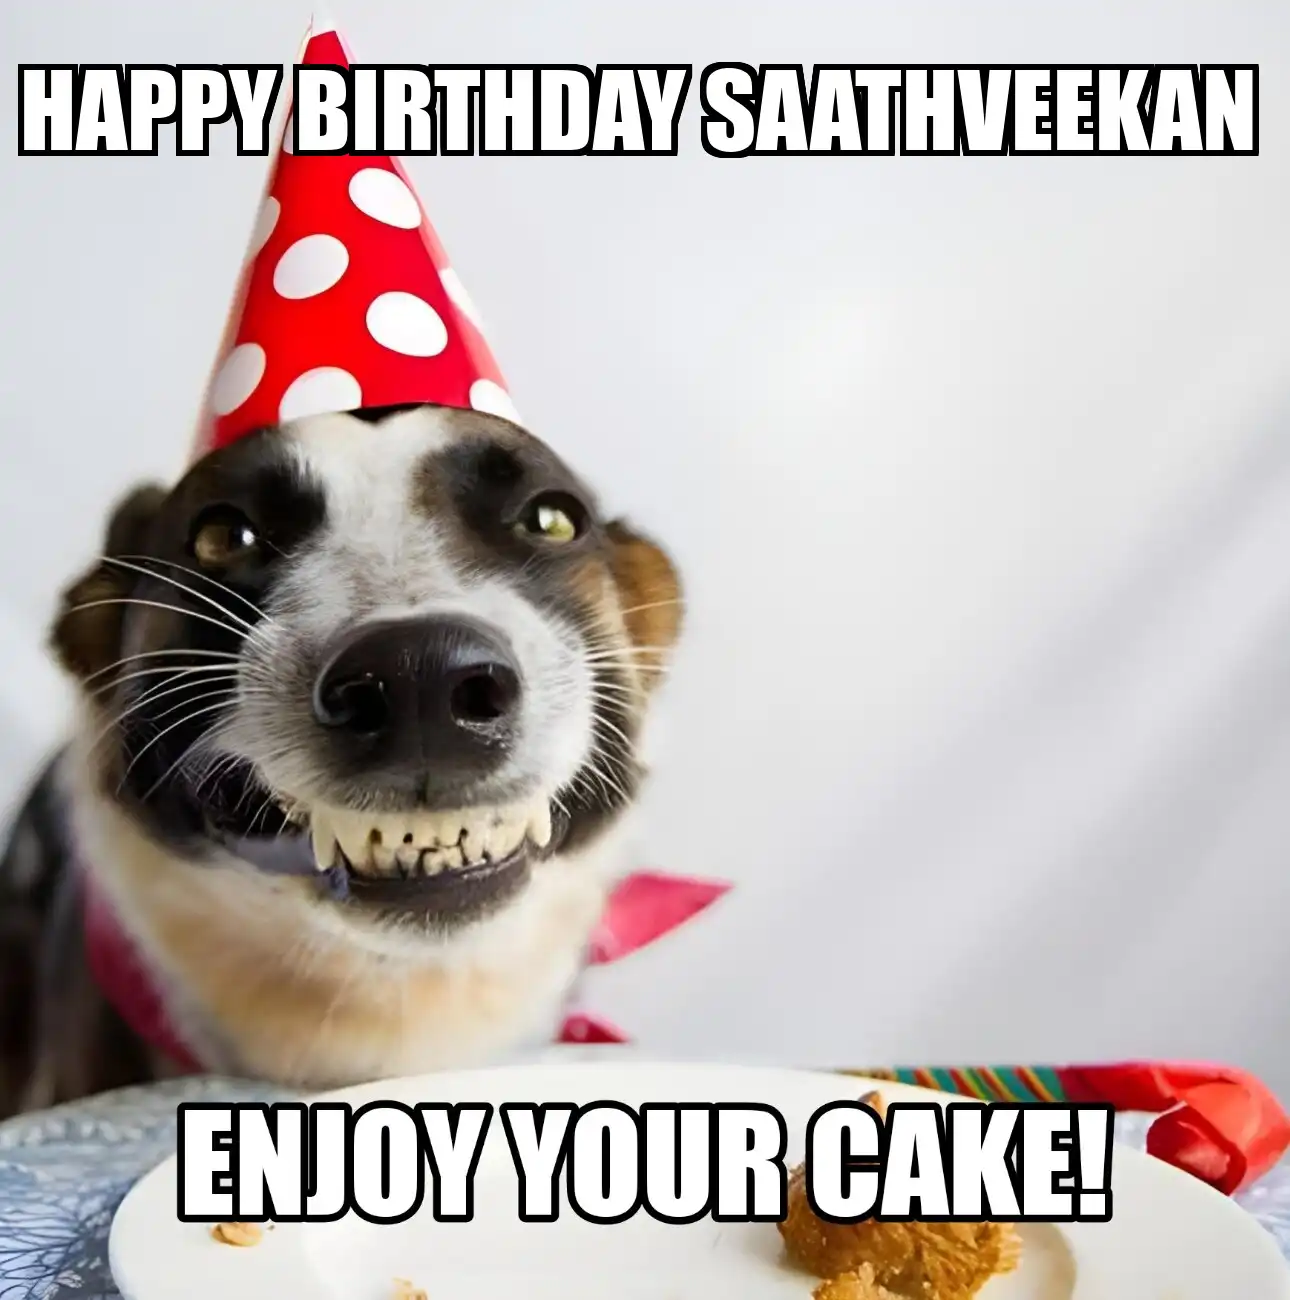 Happy Birthday Saathveekan Enjoy Your Cake Dog Meme